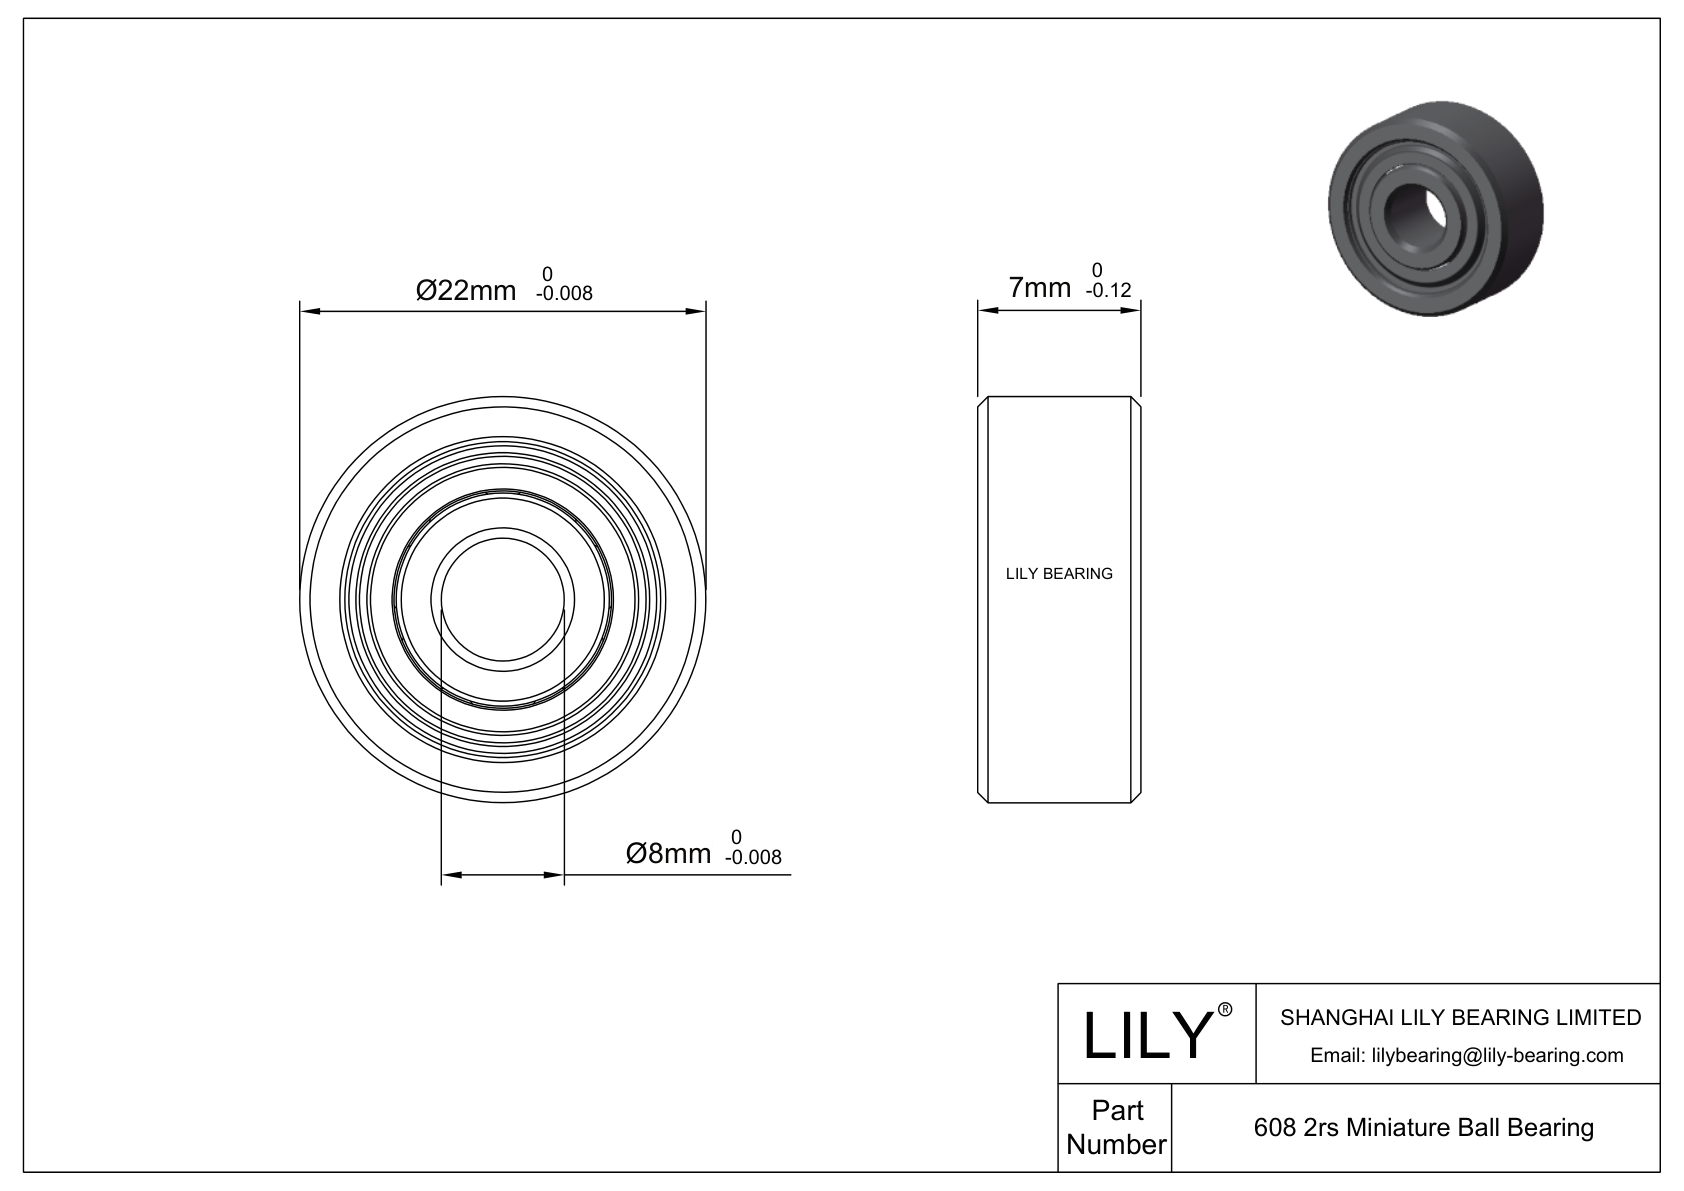 LILY-PU60845-14 Polyurethane Coated Bearing cad drawing